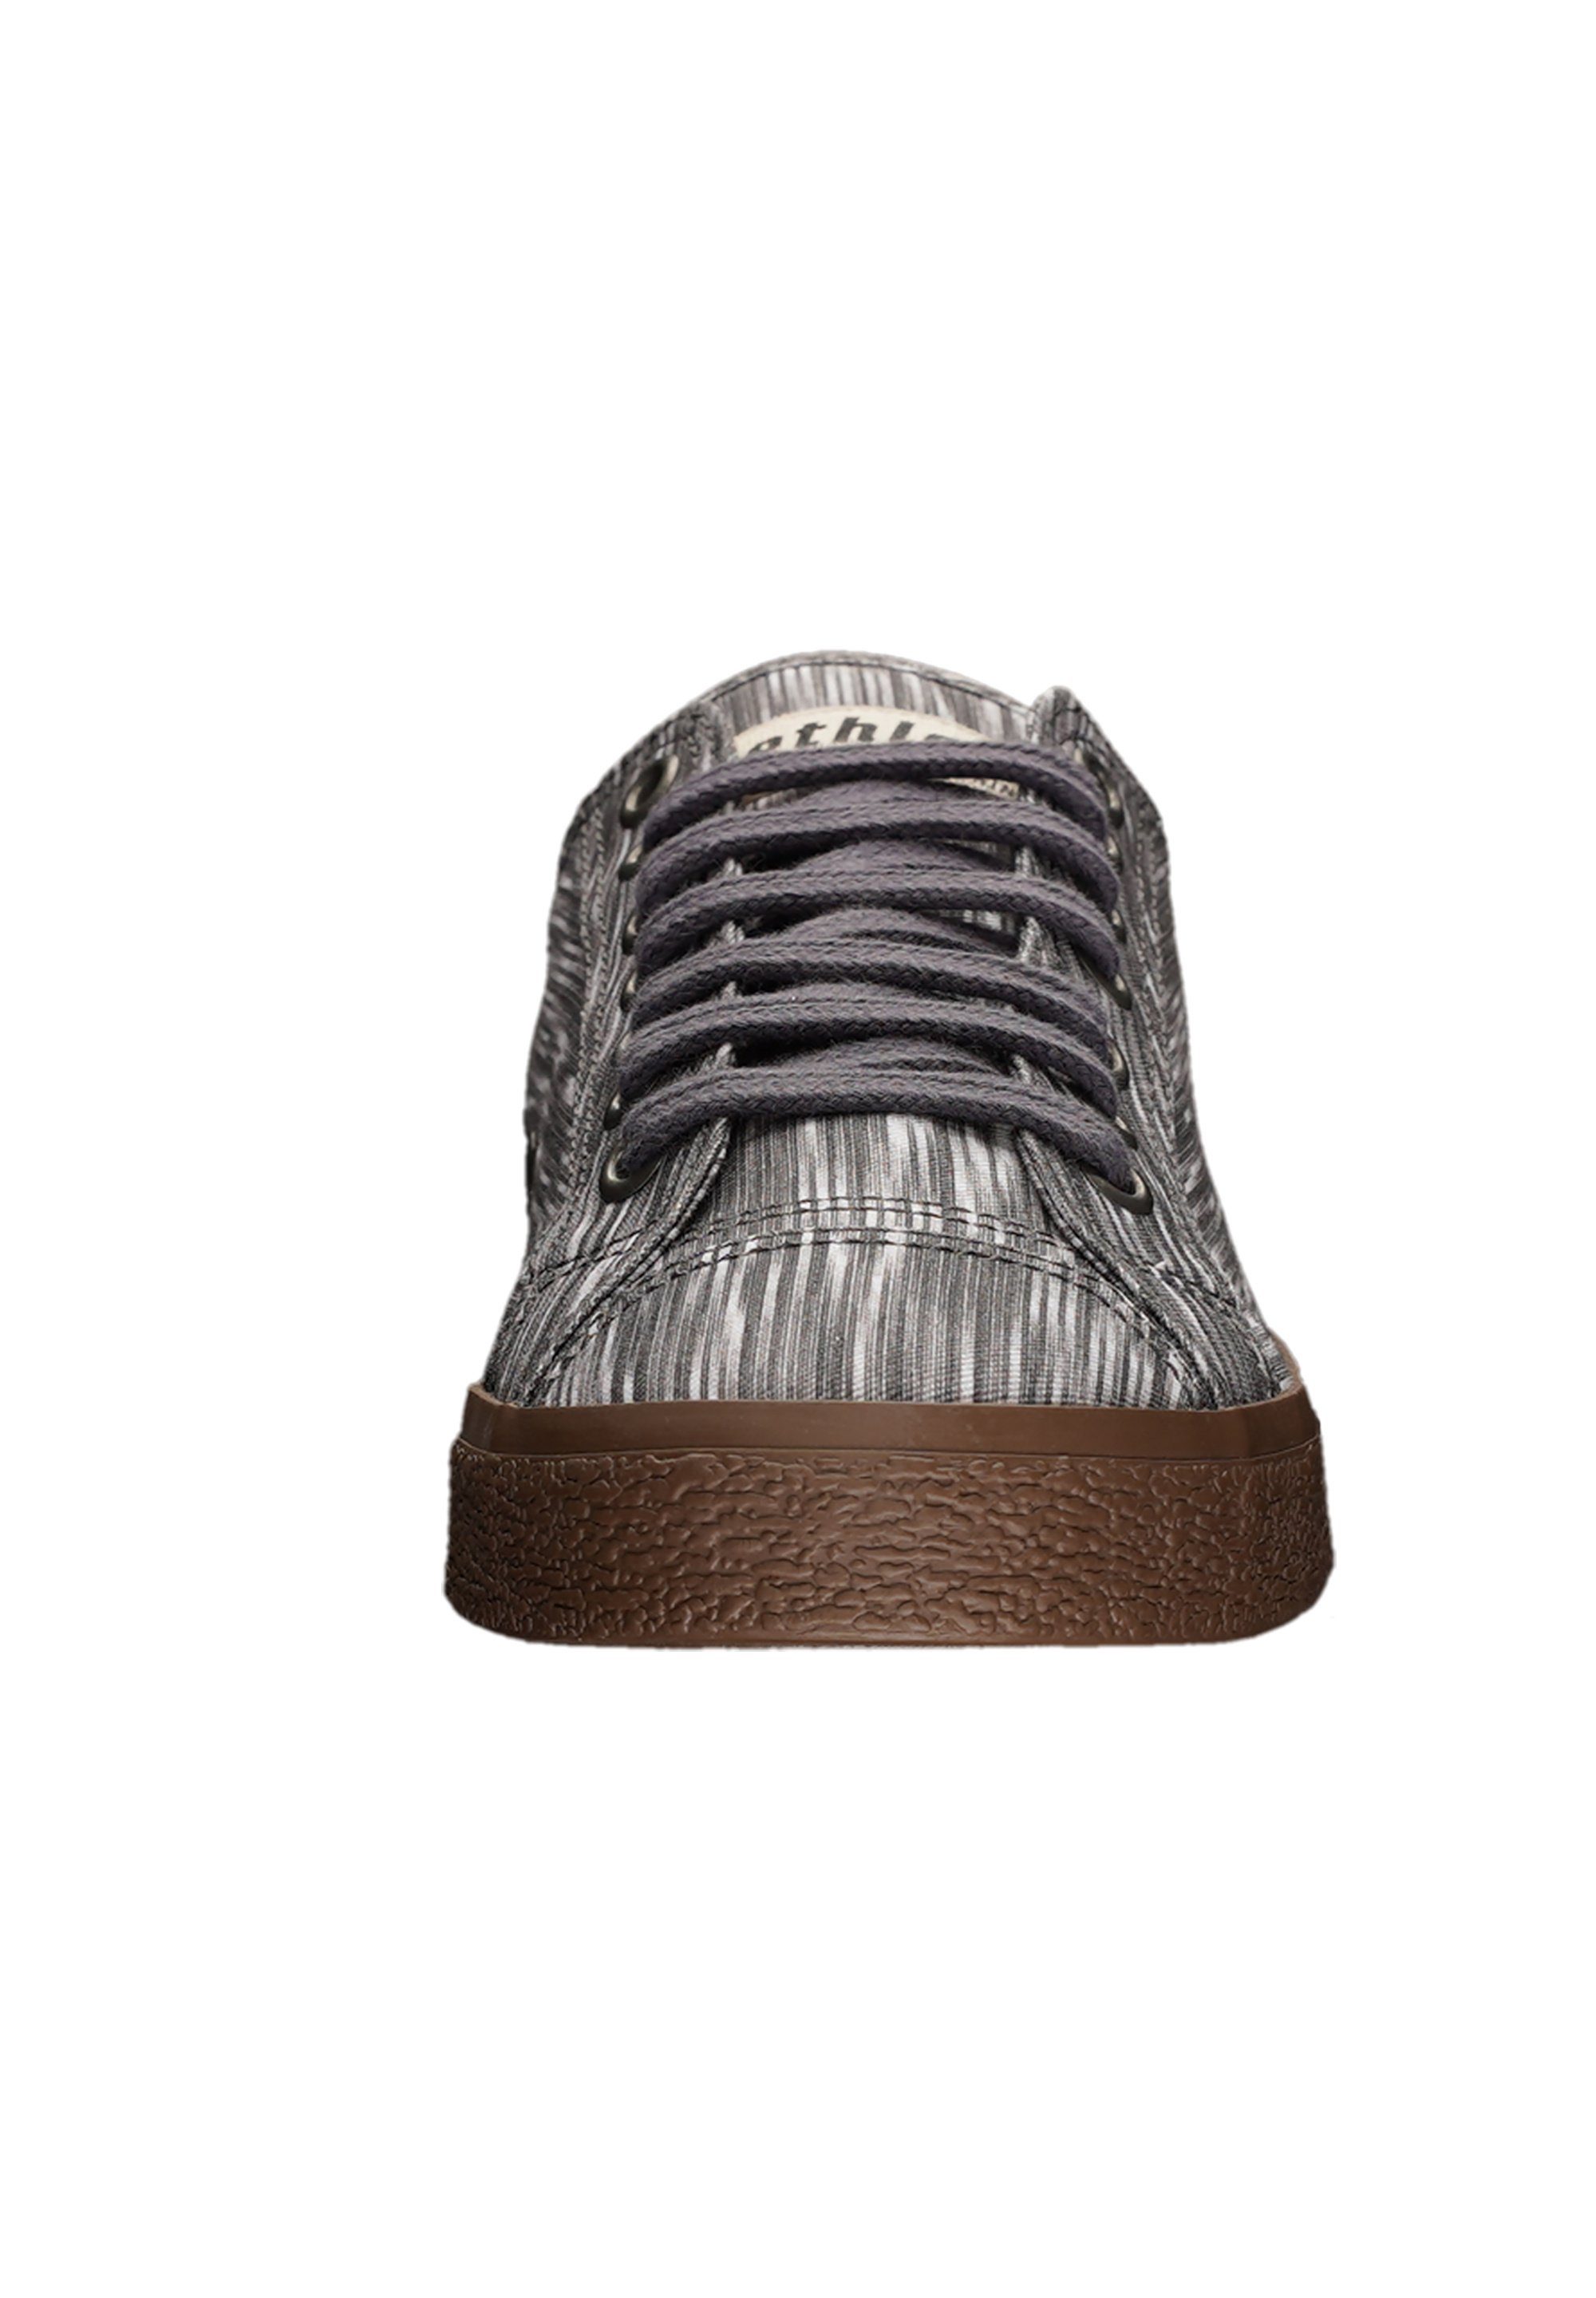 ETHLETIC Goto Lo melange Fairtrade grey Produkt Sneaker